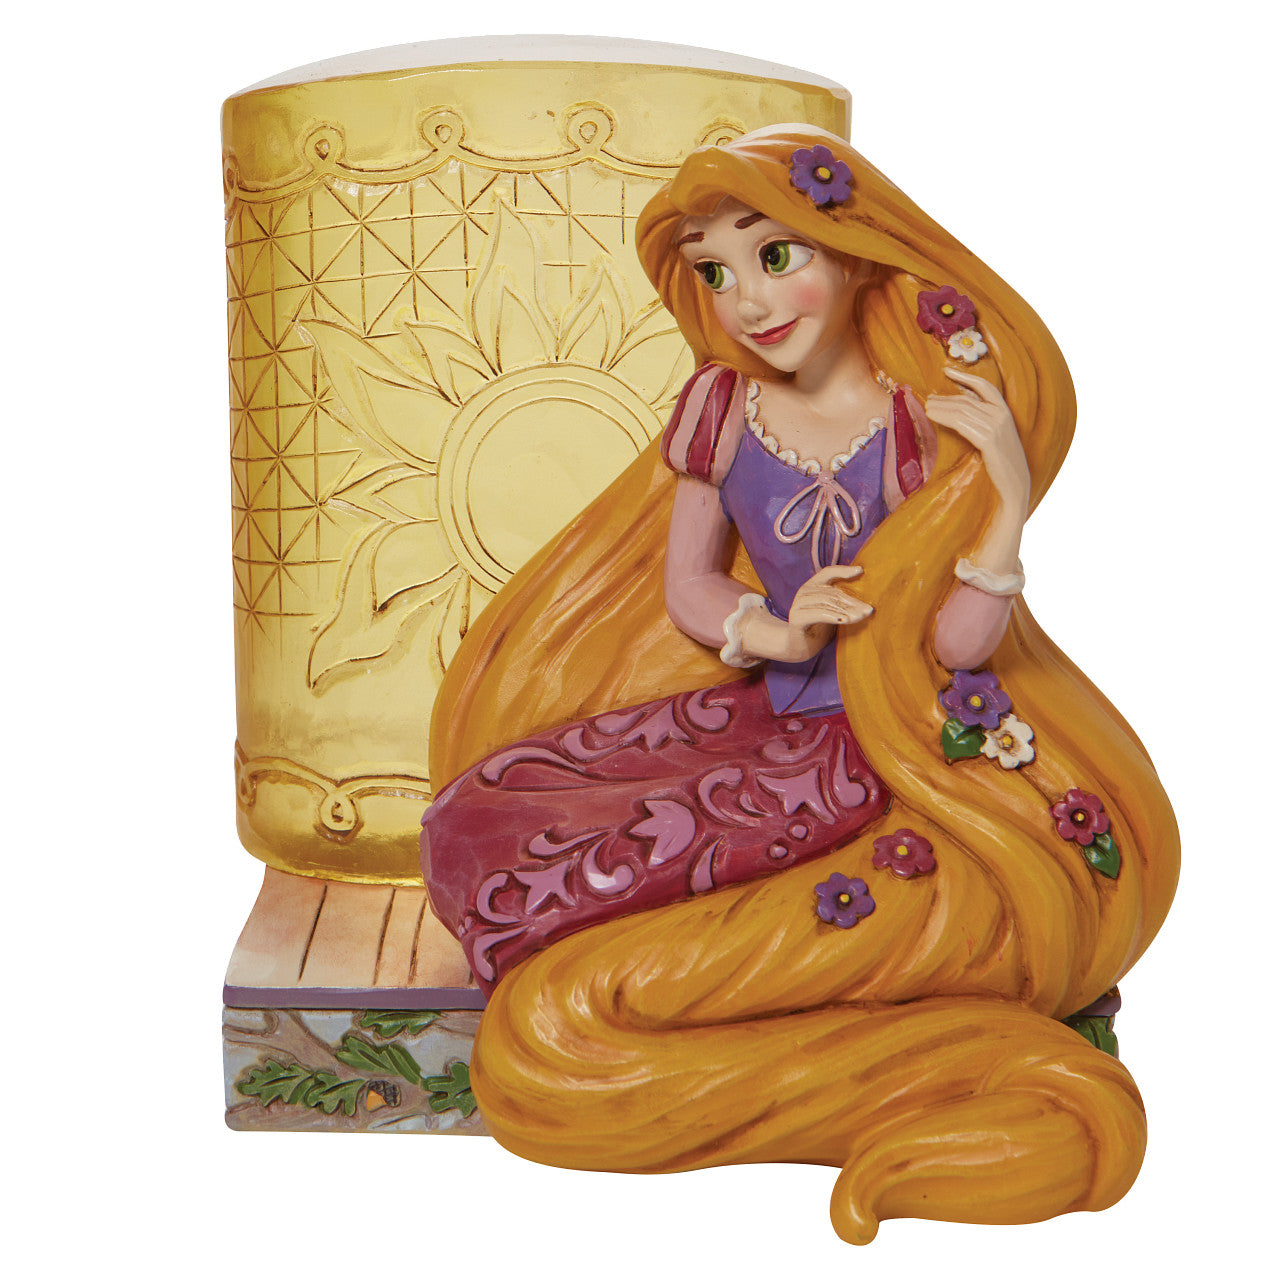 A New Dream - Rapunzel with Lantern